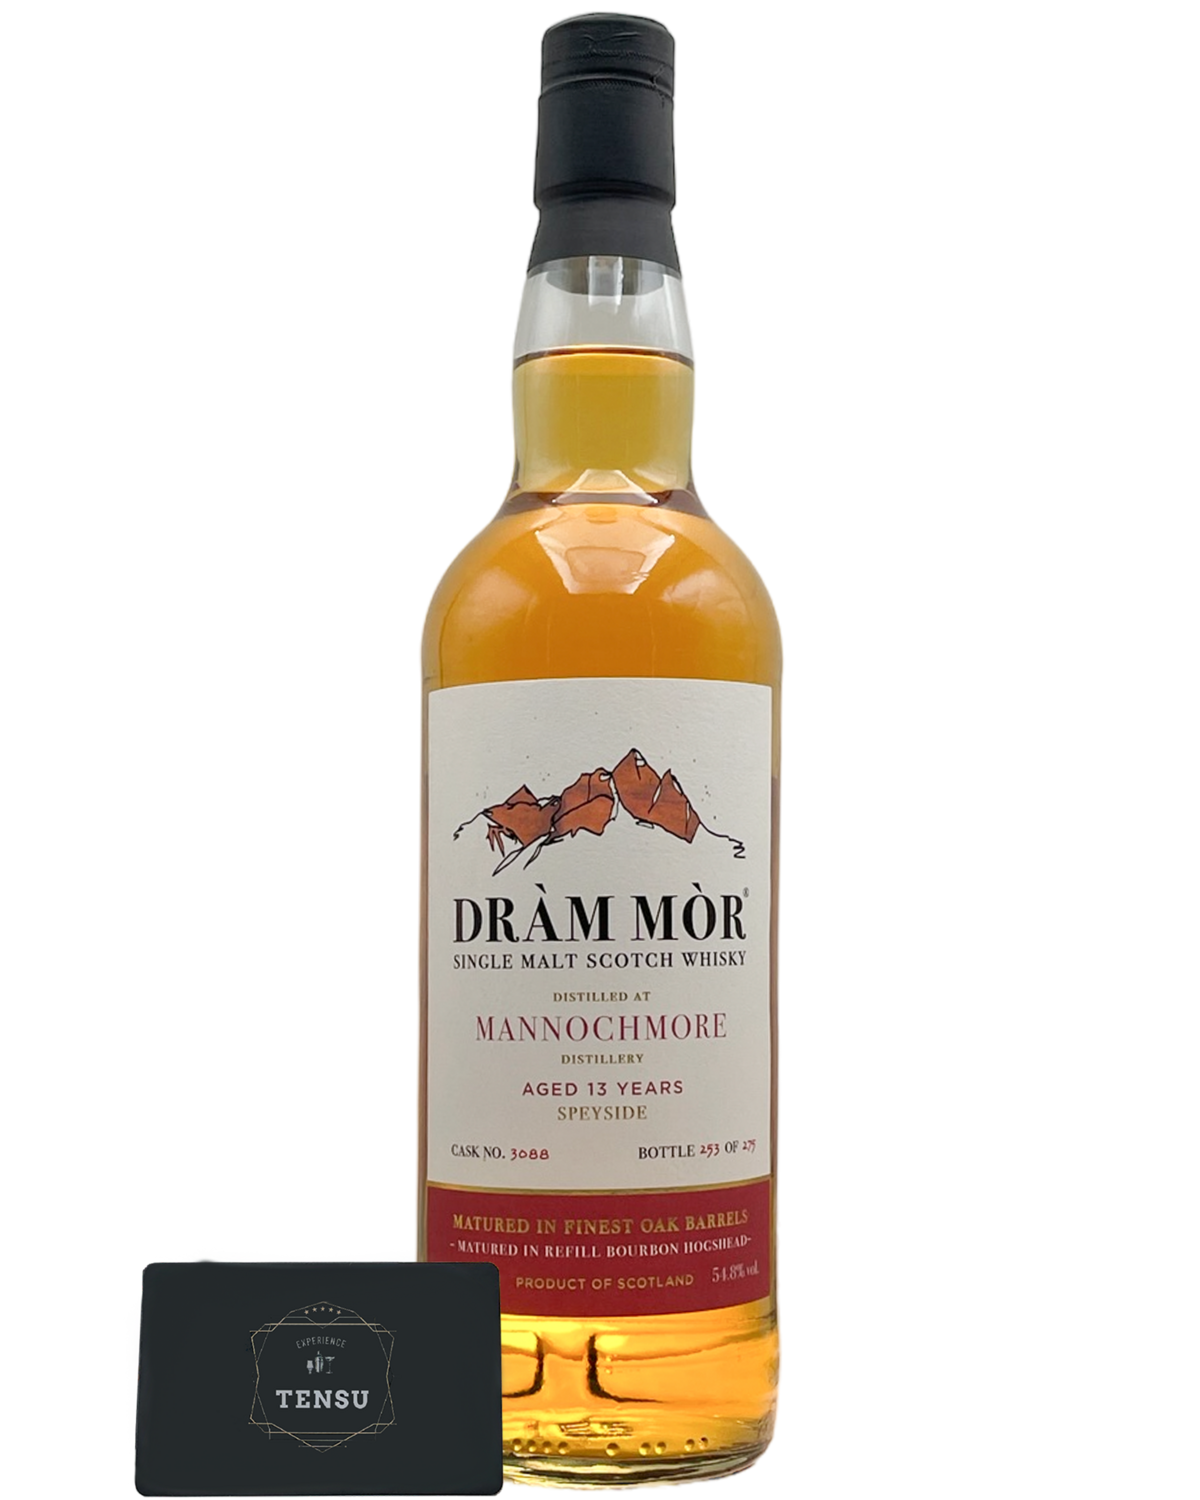 Mannochmore 13Y (2010-2023) Refill Bourbon Hogshead 54.8 "Dram Mor"